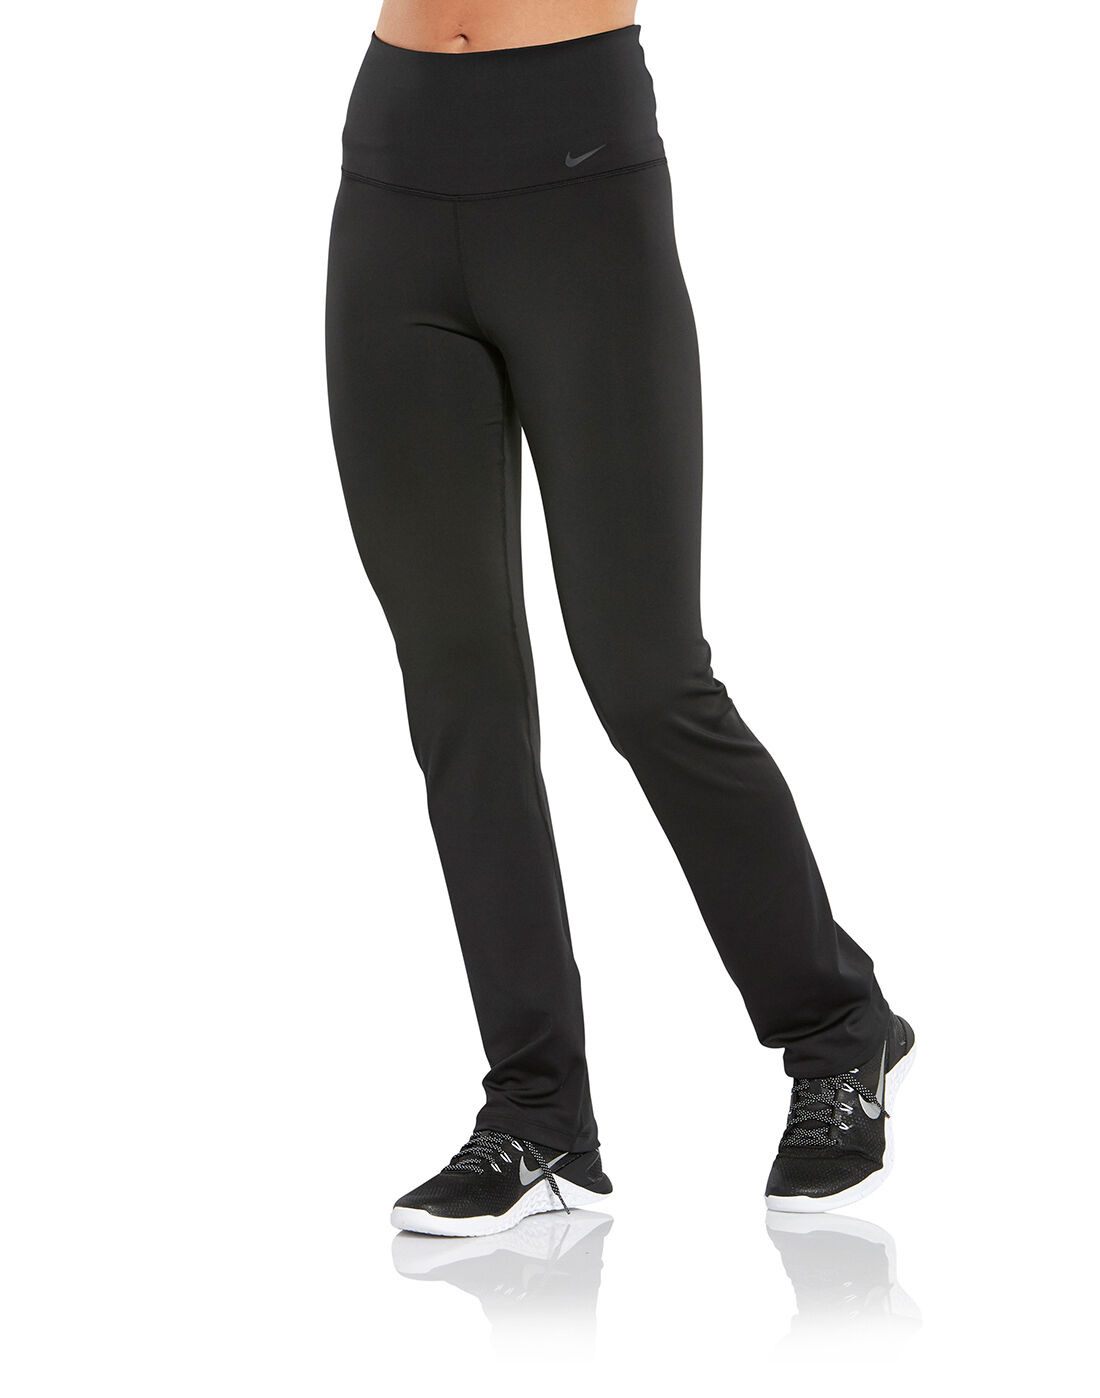 Women's Black Nike Gym Pants | Life 